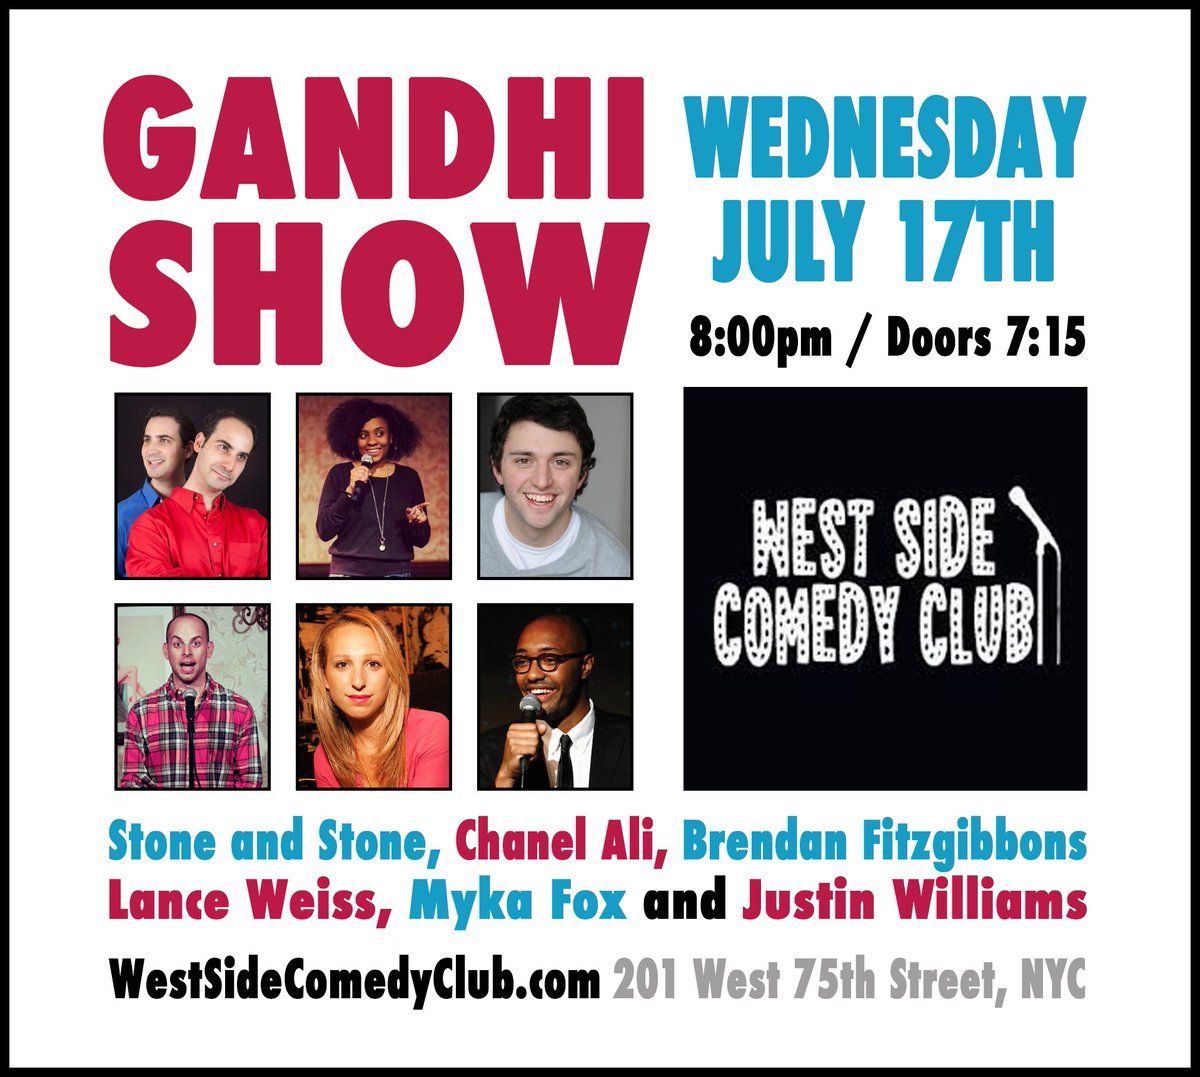 TONIGHT @ 8:00pm! @WESTSIDECCNYC with @Brendan_Fitz @PartyWithLance @MykaFox @Justinwcomedy @chanel__ali @stoneandstone 

TICKETS! - westsidecomedyclub.com/shows/103778

#comedy #nyc #thingstodoinnyc #standupcomedy #UWS #Manhattan